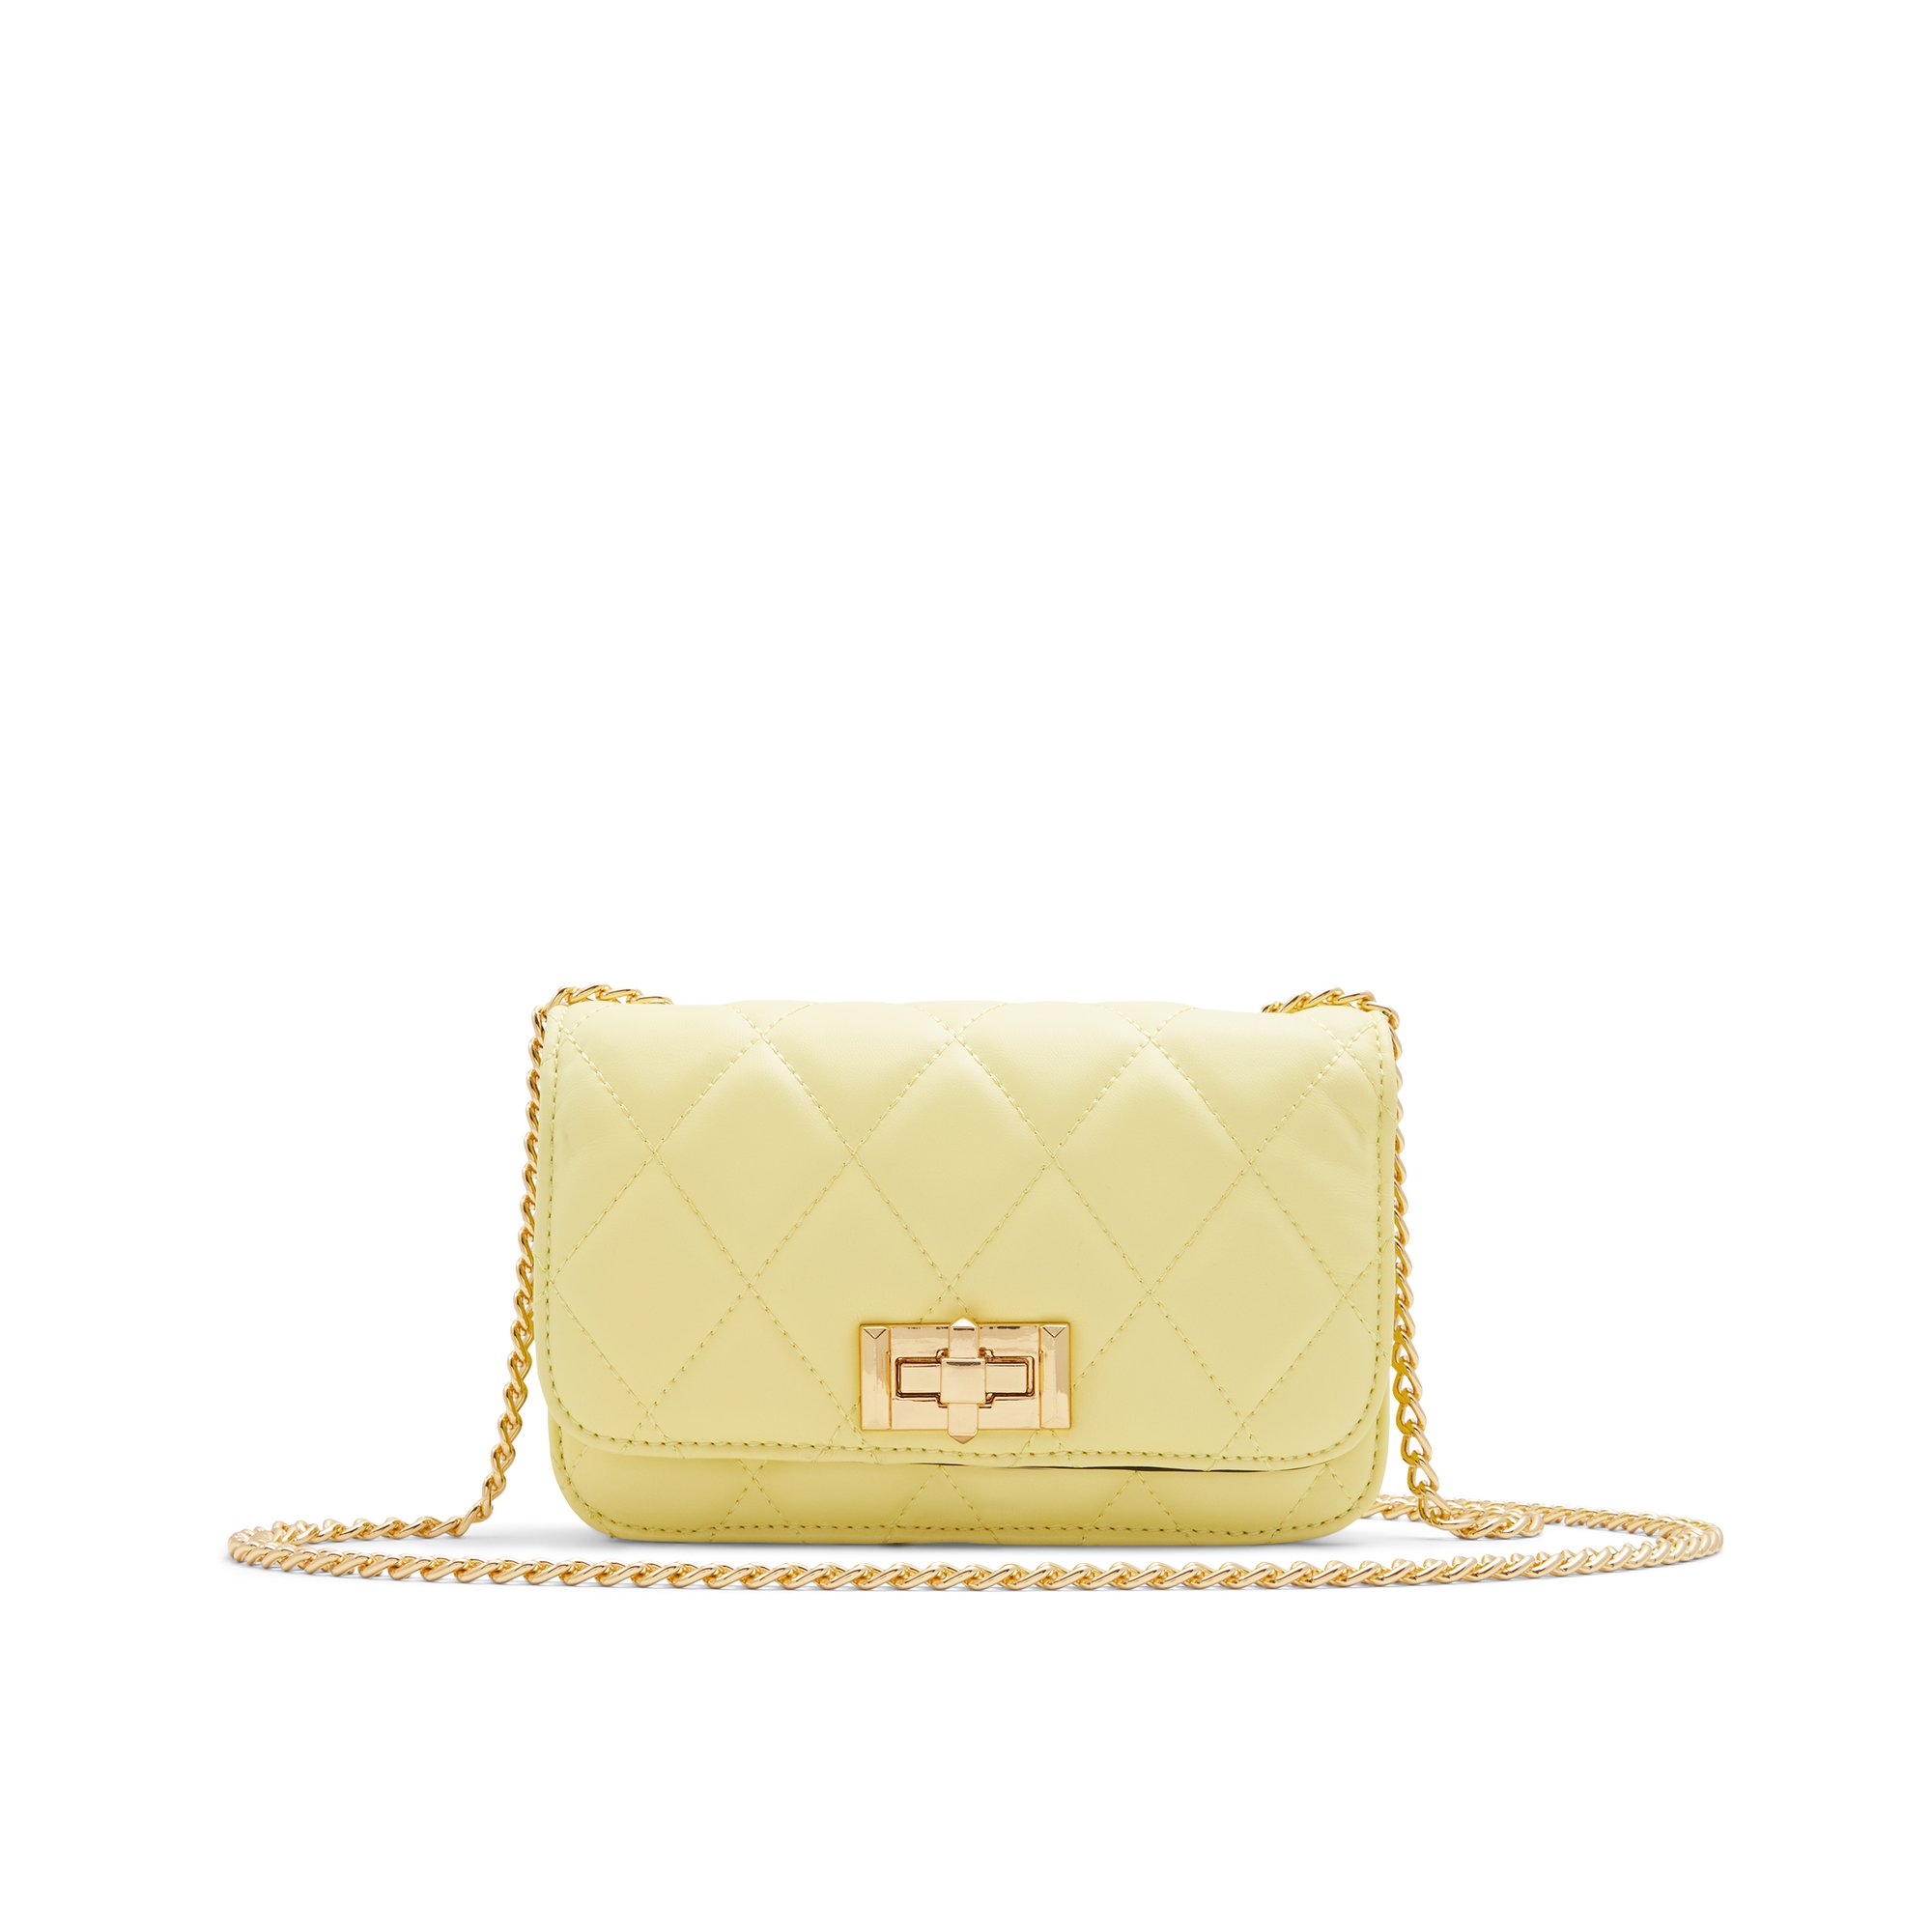 ALDO Grydyyx - Women's Handbags Crossbody - Yellow